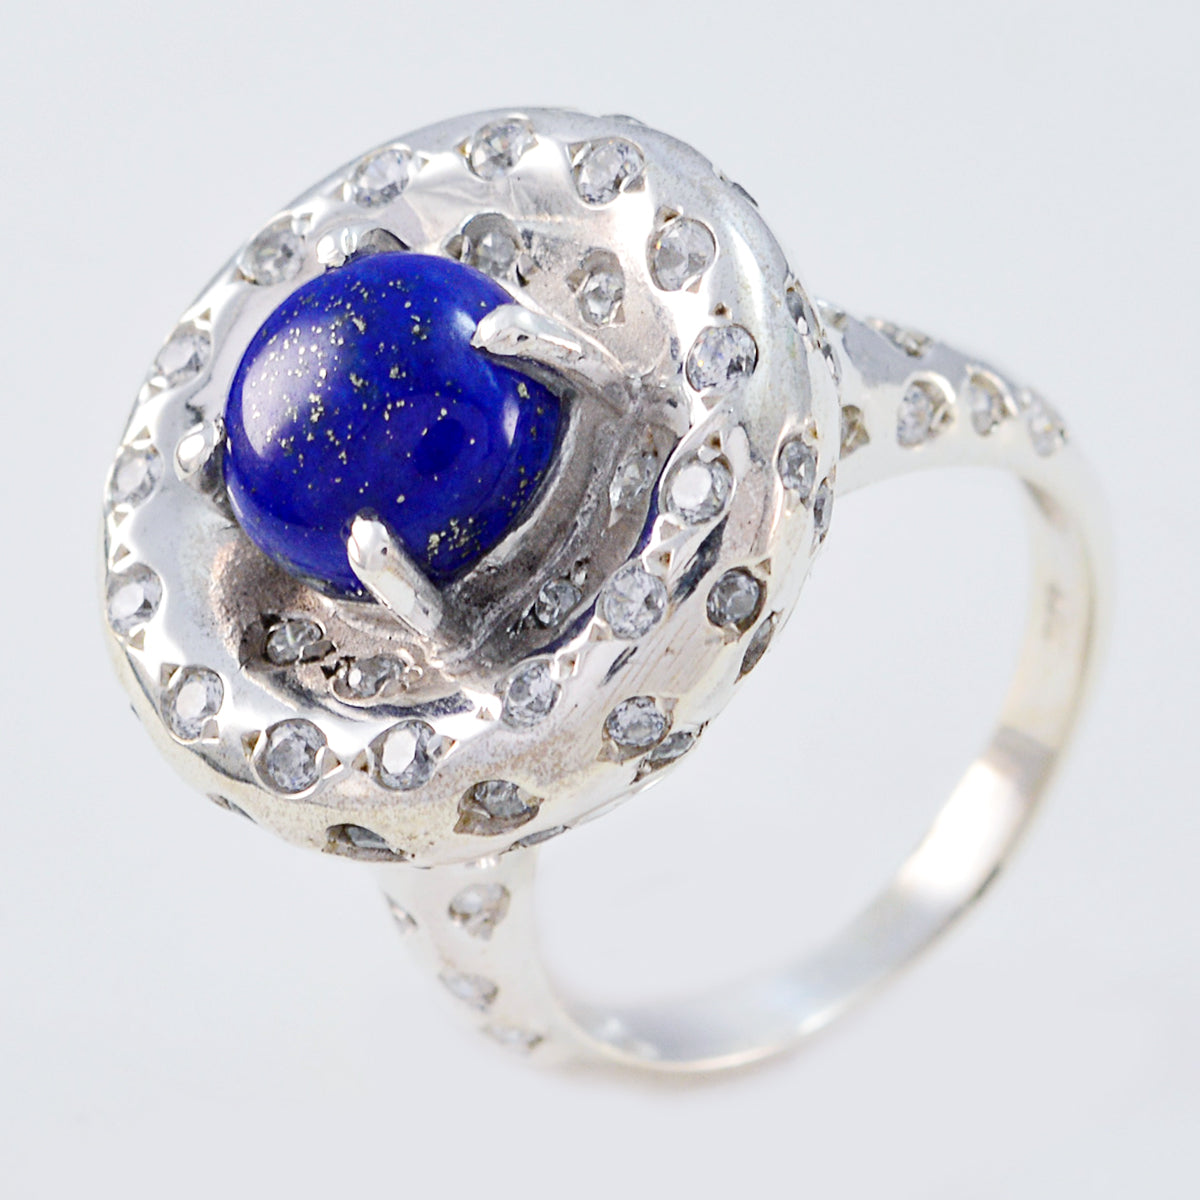 Riyo Mesmeric Gem Lapis Lazuli Solid Silver Ring Sterling Jewelry